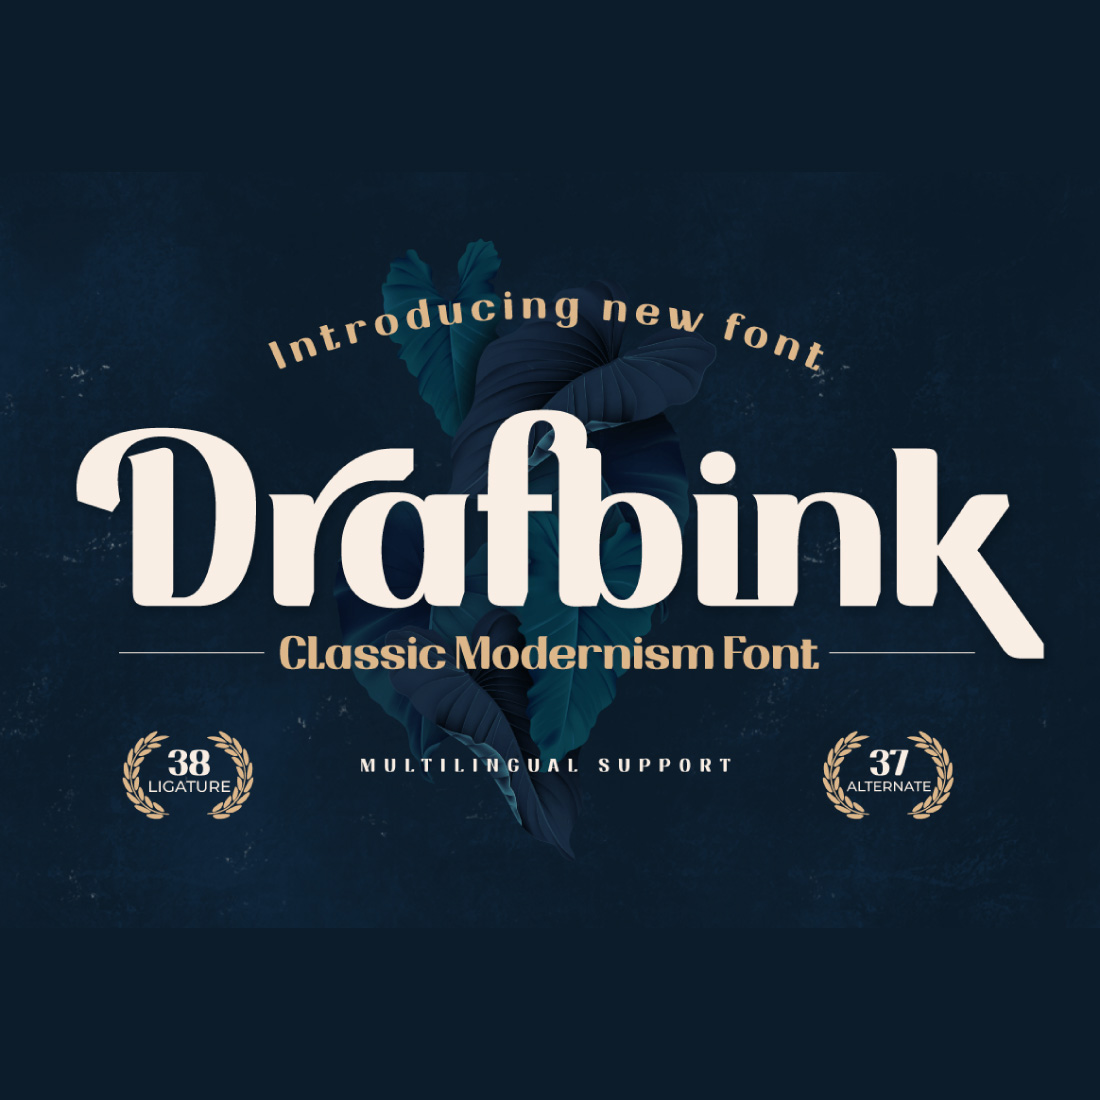 Drafbink | Serif Classic Modernism cover image.